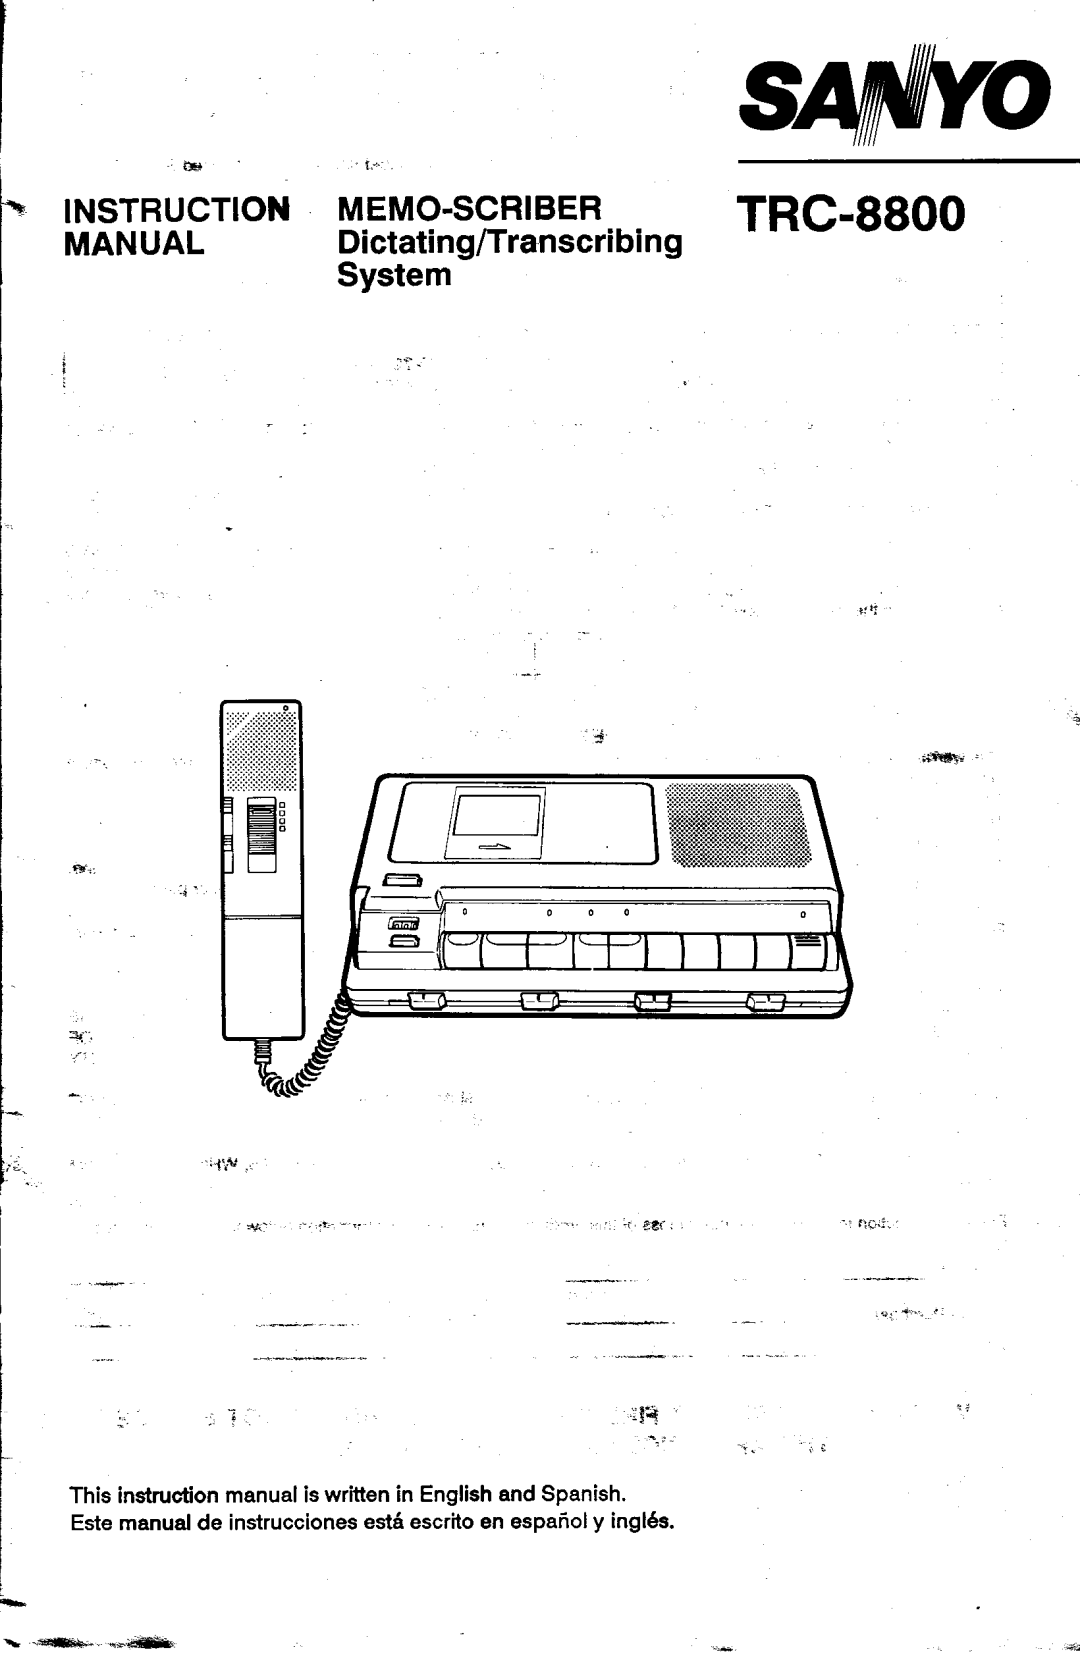 Sanyo instruction manual INSTRUCTION MEMO-SCRIBER TRC-8800, MANUAL Dictating/Transcribi System, llr , a, iqfa 